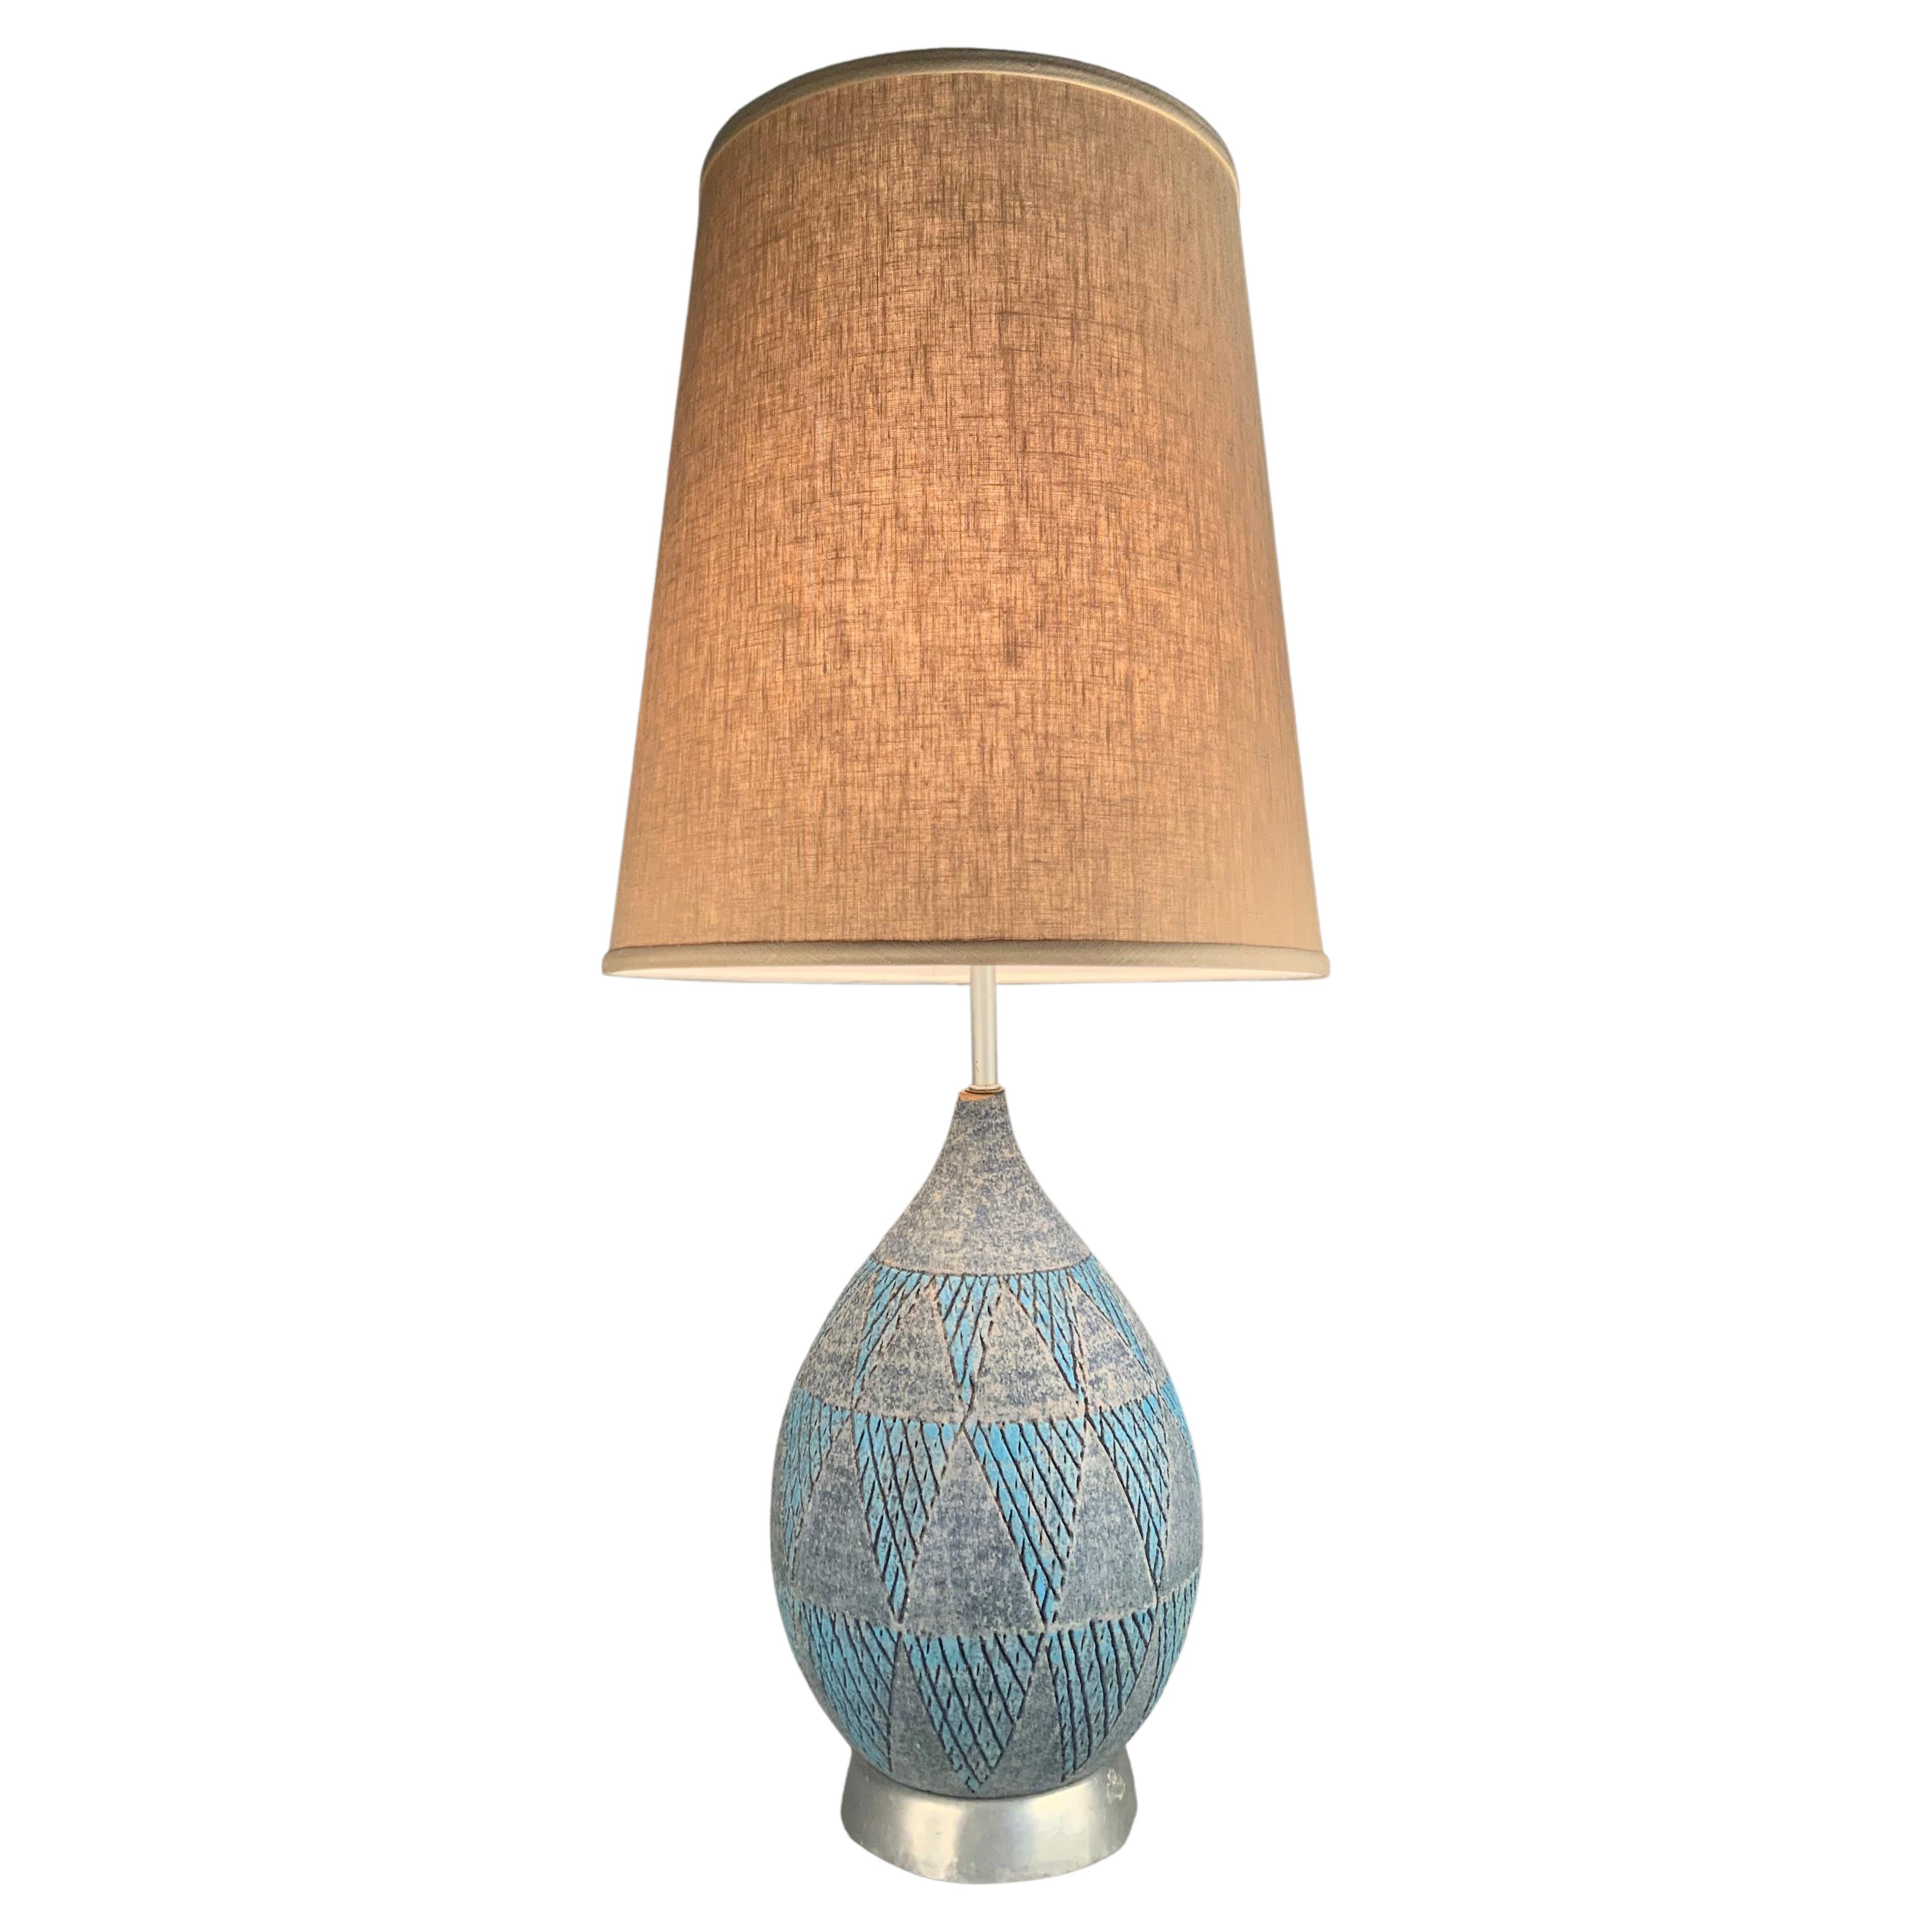 Italian 1950's Ceramic Lamp by Bitossi For Sale